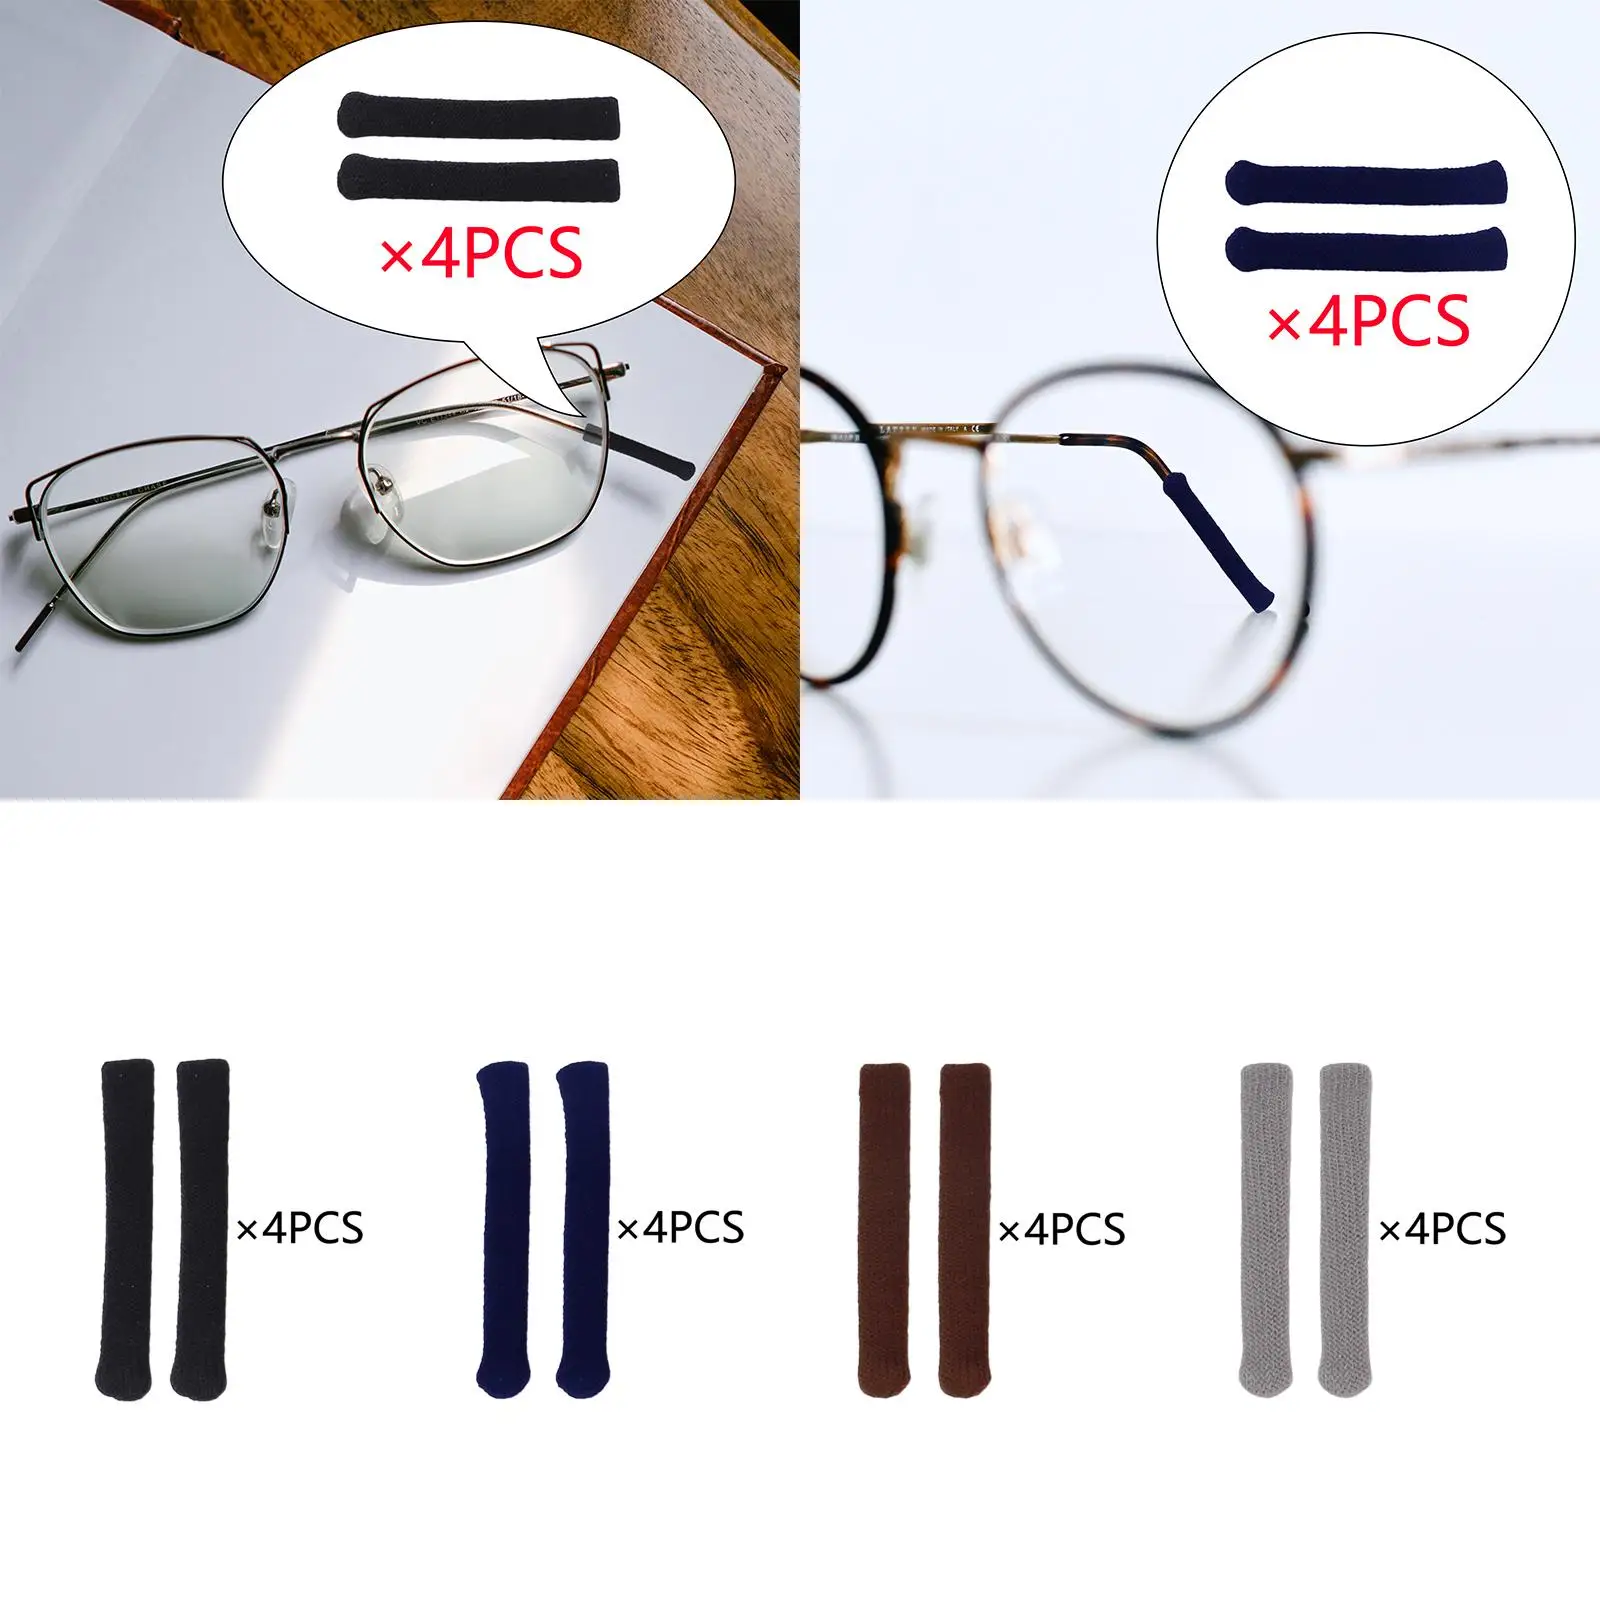 4 Pairs Eyeglasses Temple Tip Sleeve Retainer Soft Knitted Anti Slip Elastic Lightweight Glasses Ear Cushions for Eyeglasses